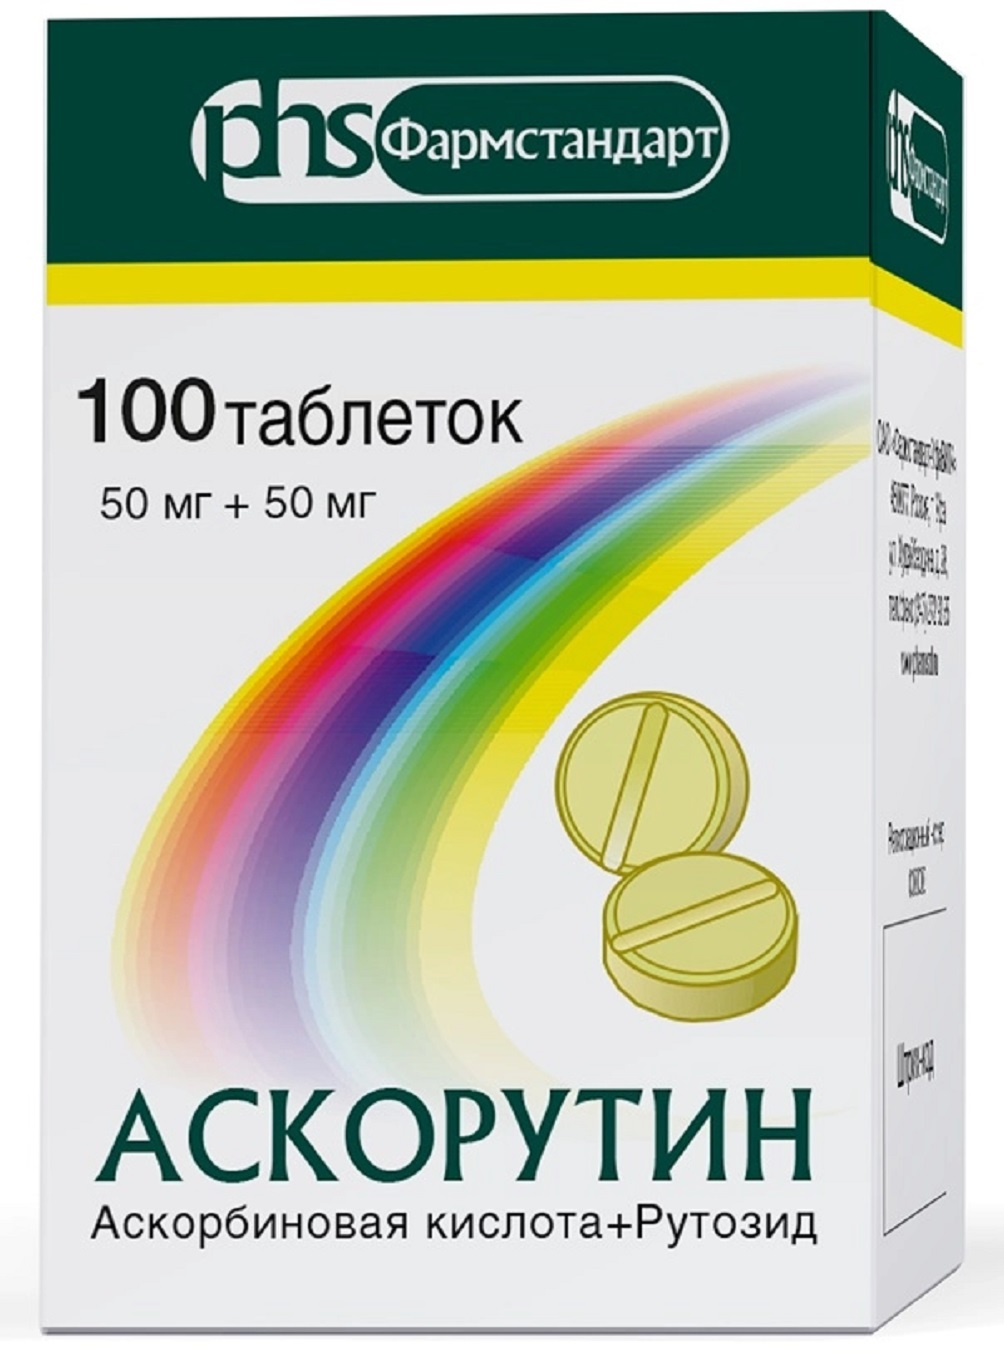 Аскорутин, таблетки 50 мг + 50 мг, 100 шт.